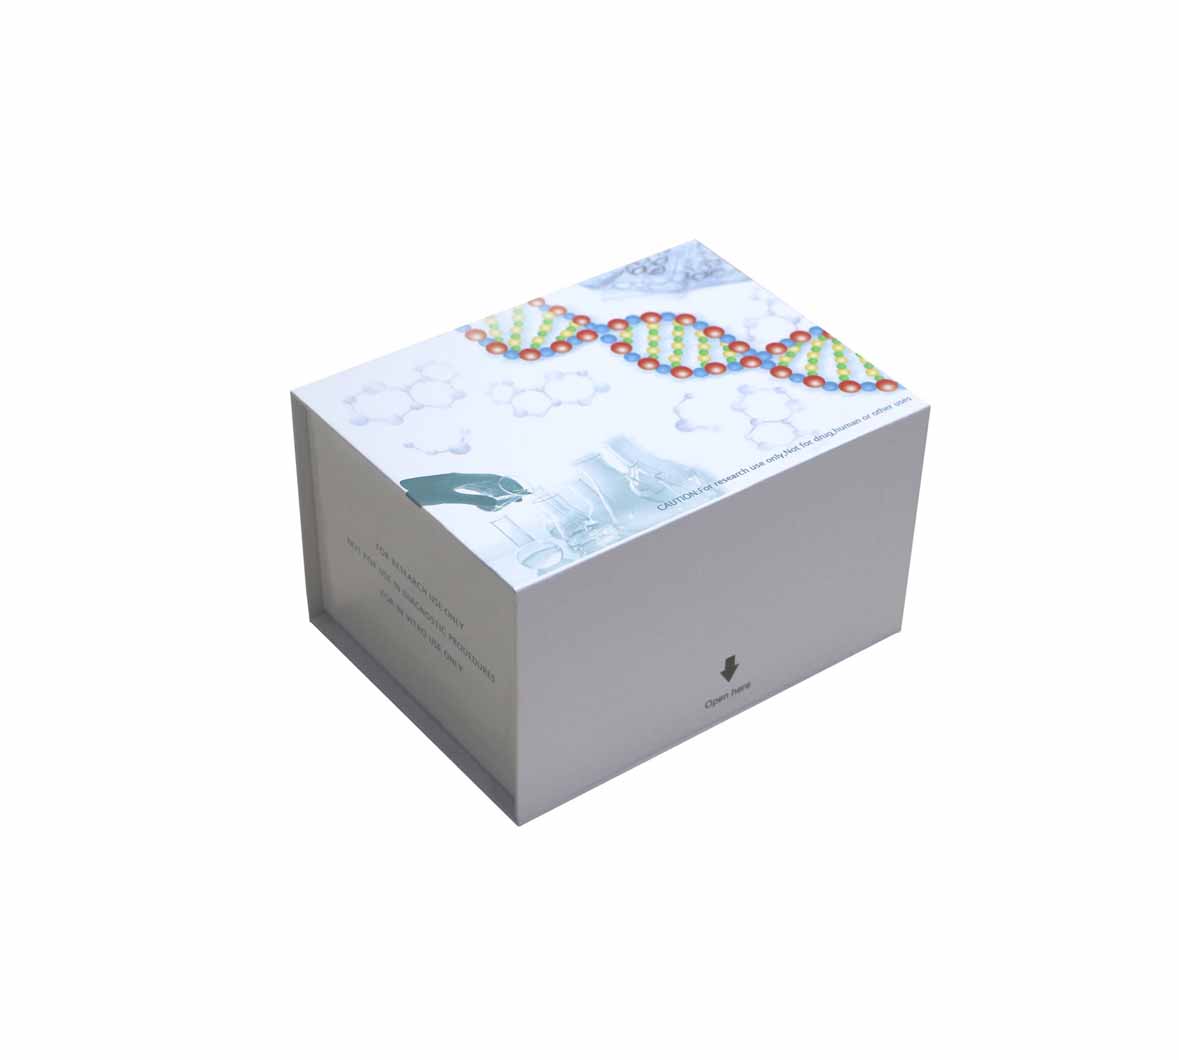 人尿碘(Urinary iodine)ELISA测定试剂盒